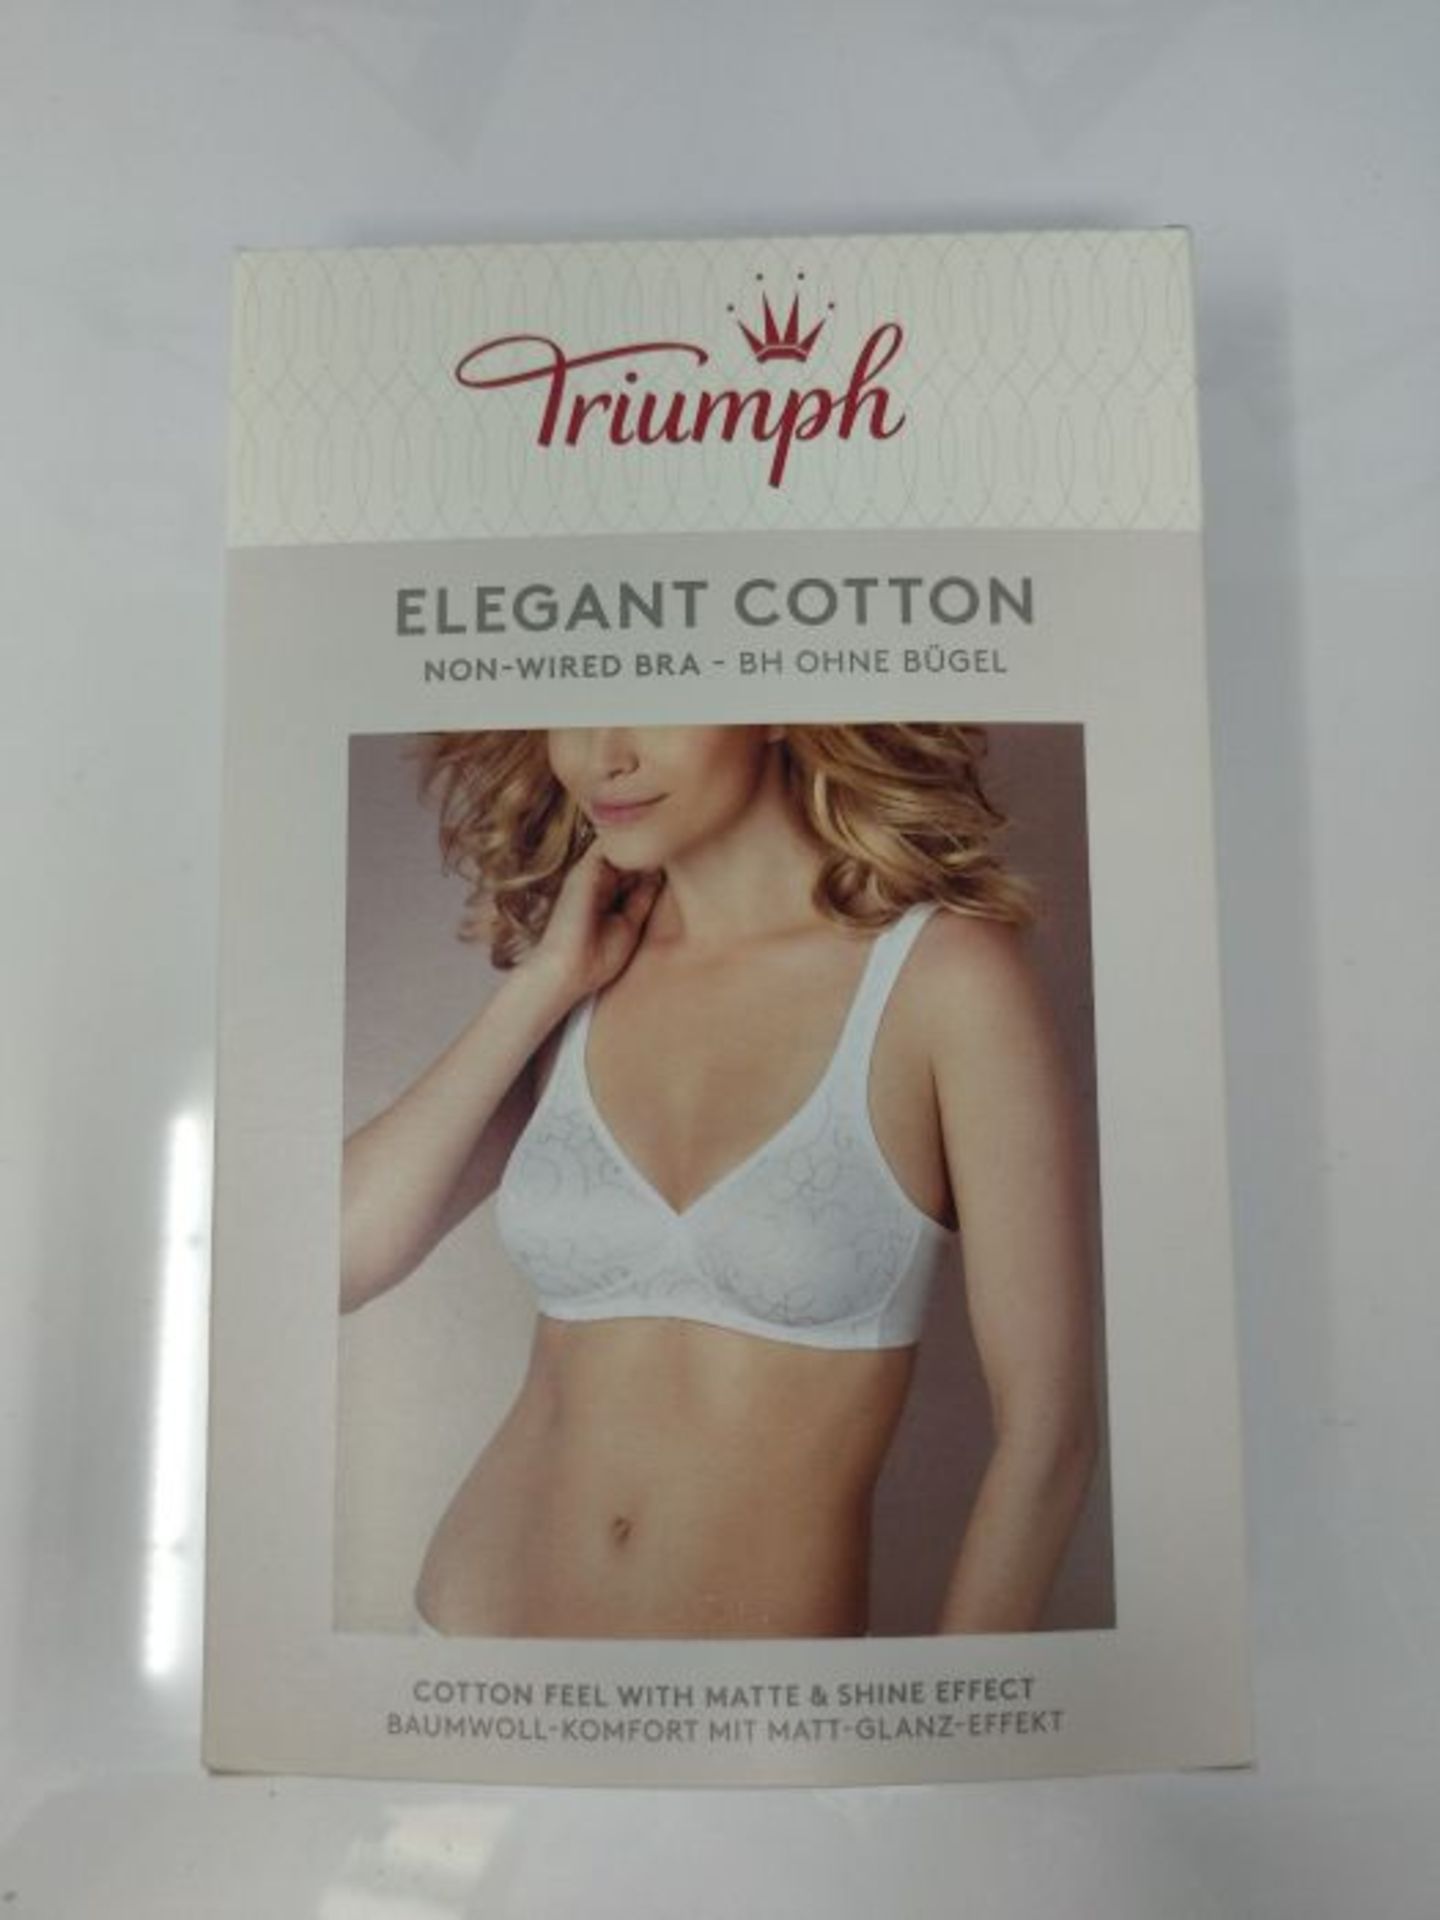 Triumph Women's Elegant Cotton N Everyday Bra, White, 42B - Image 2 of 3